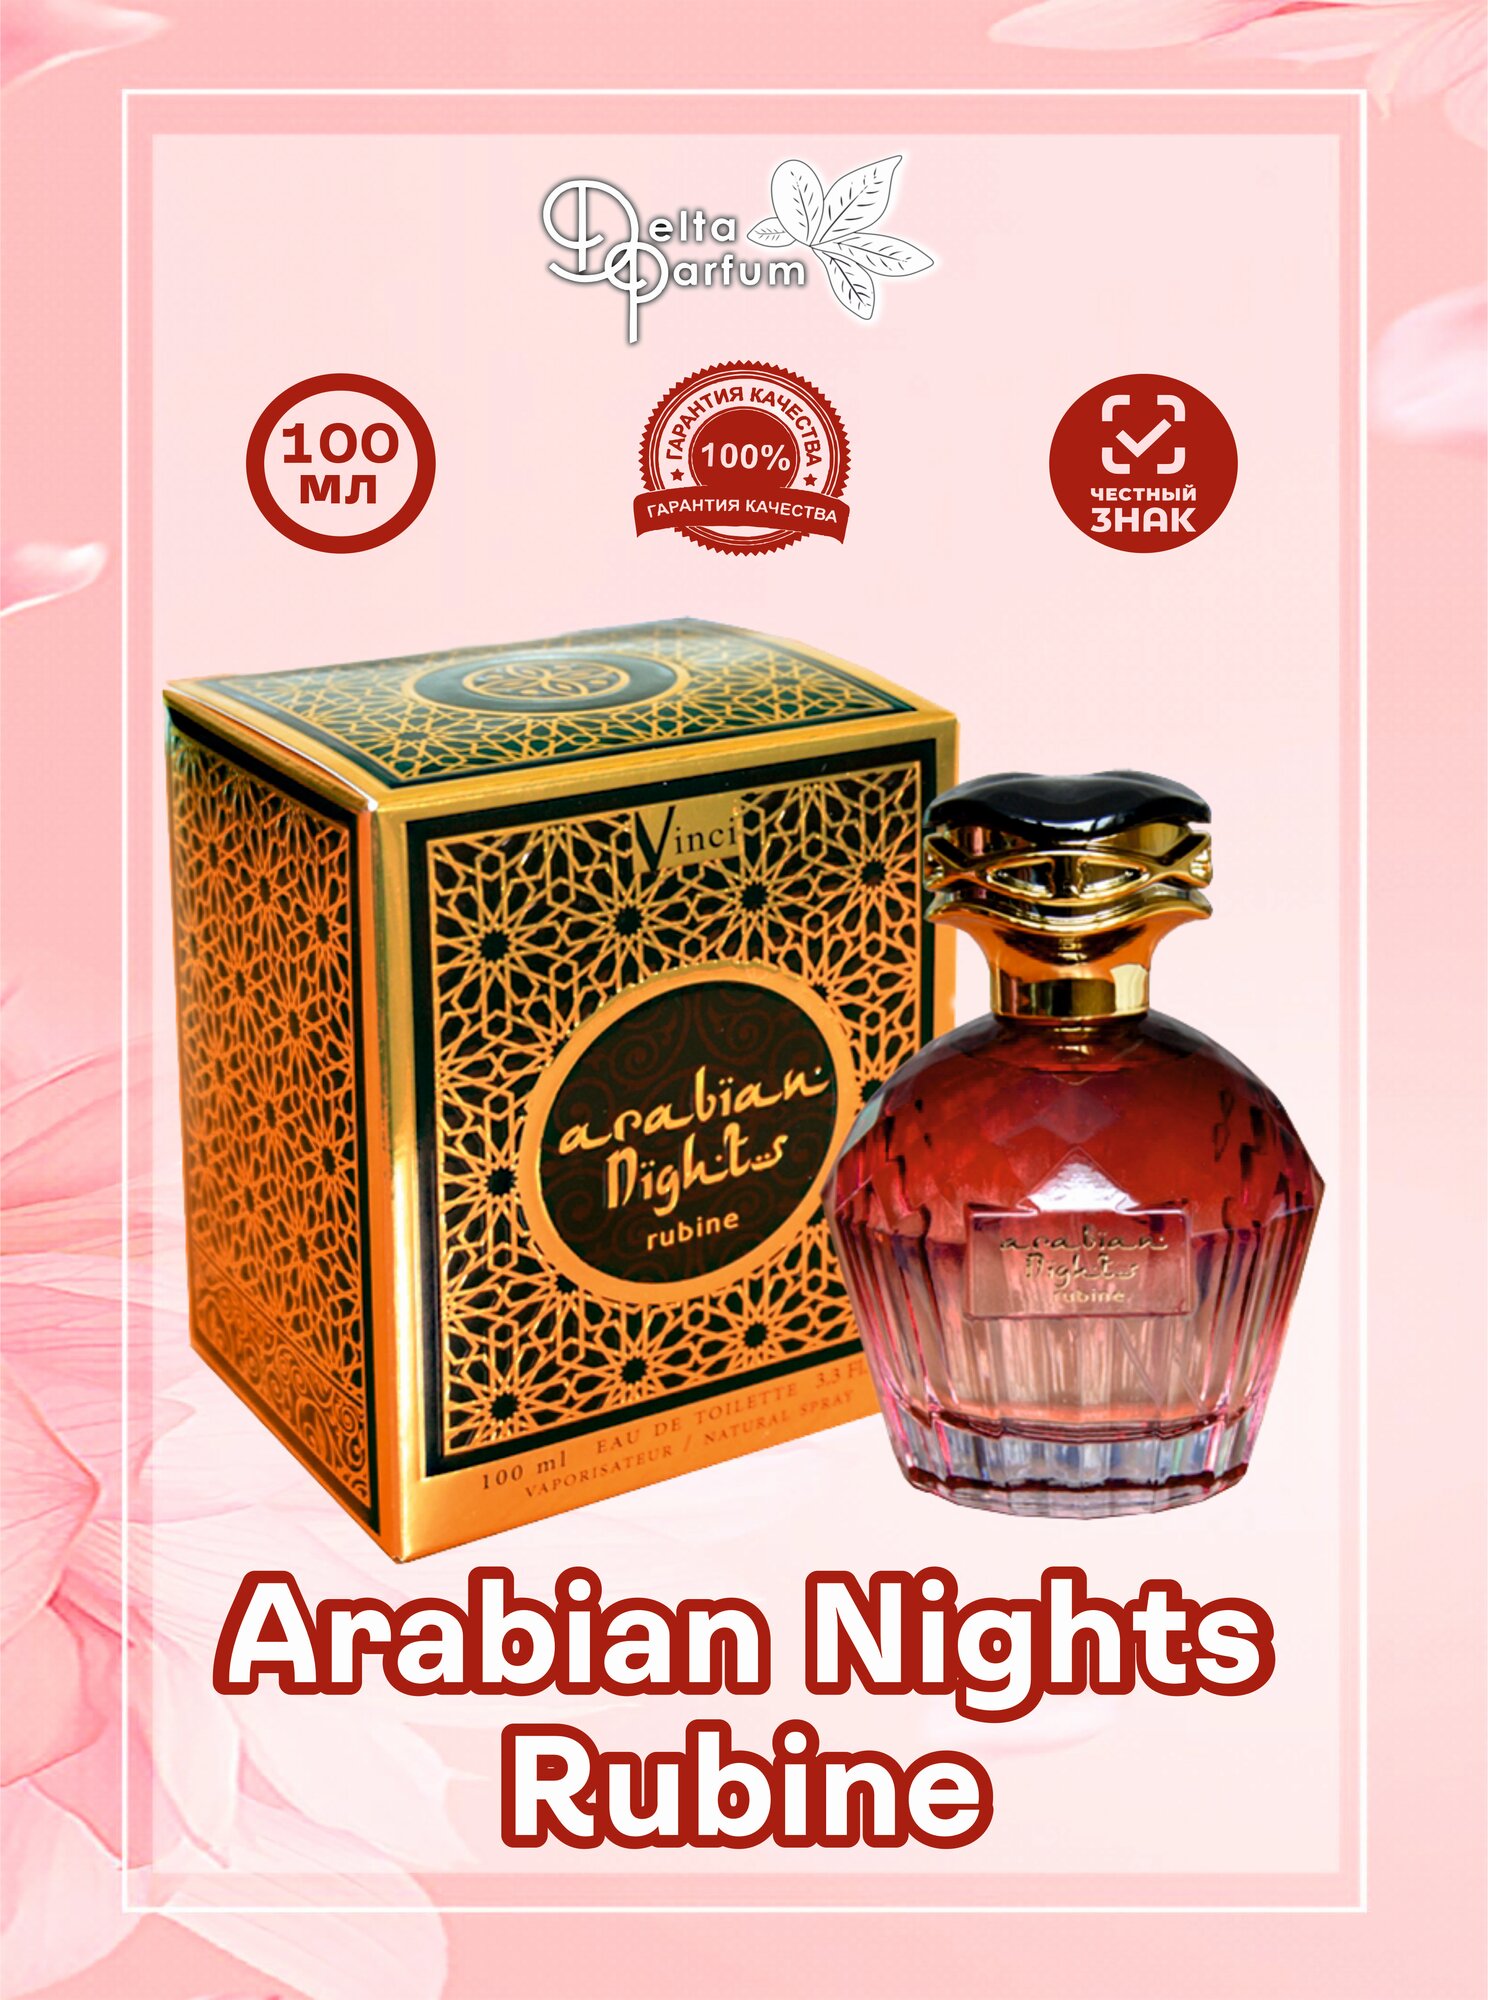 VINCI (Delta parfum) Туалетная вода ARABIAN NIGHTS RUBINE